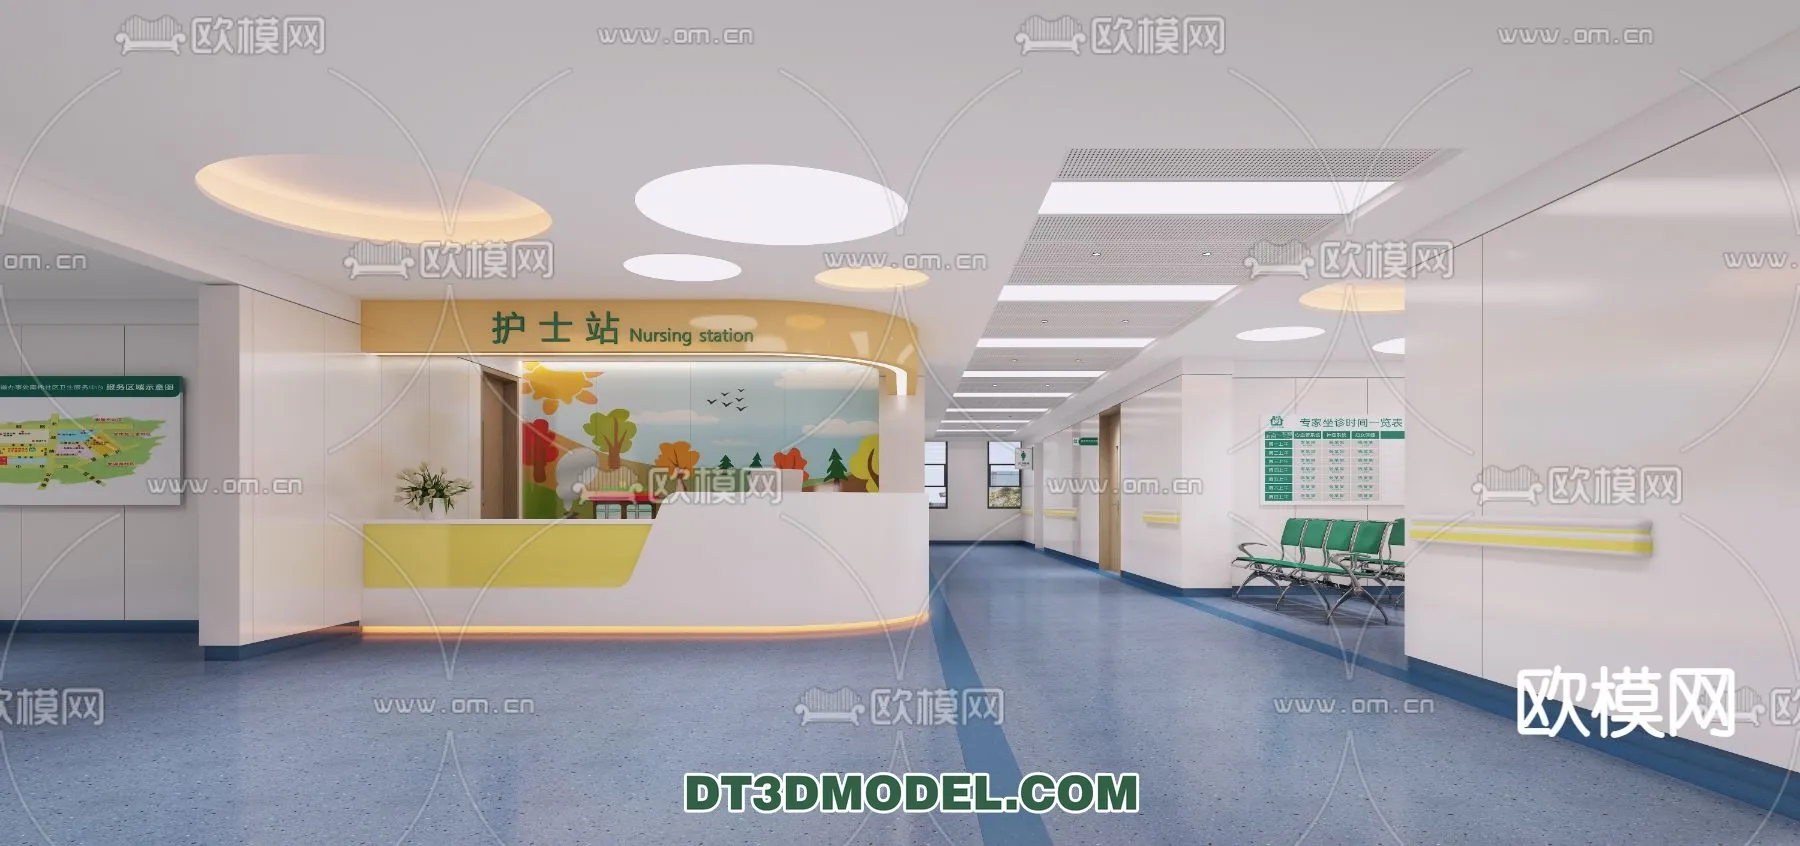 HOSPITAL 3D SCENES – MODERN – 0165